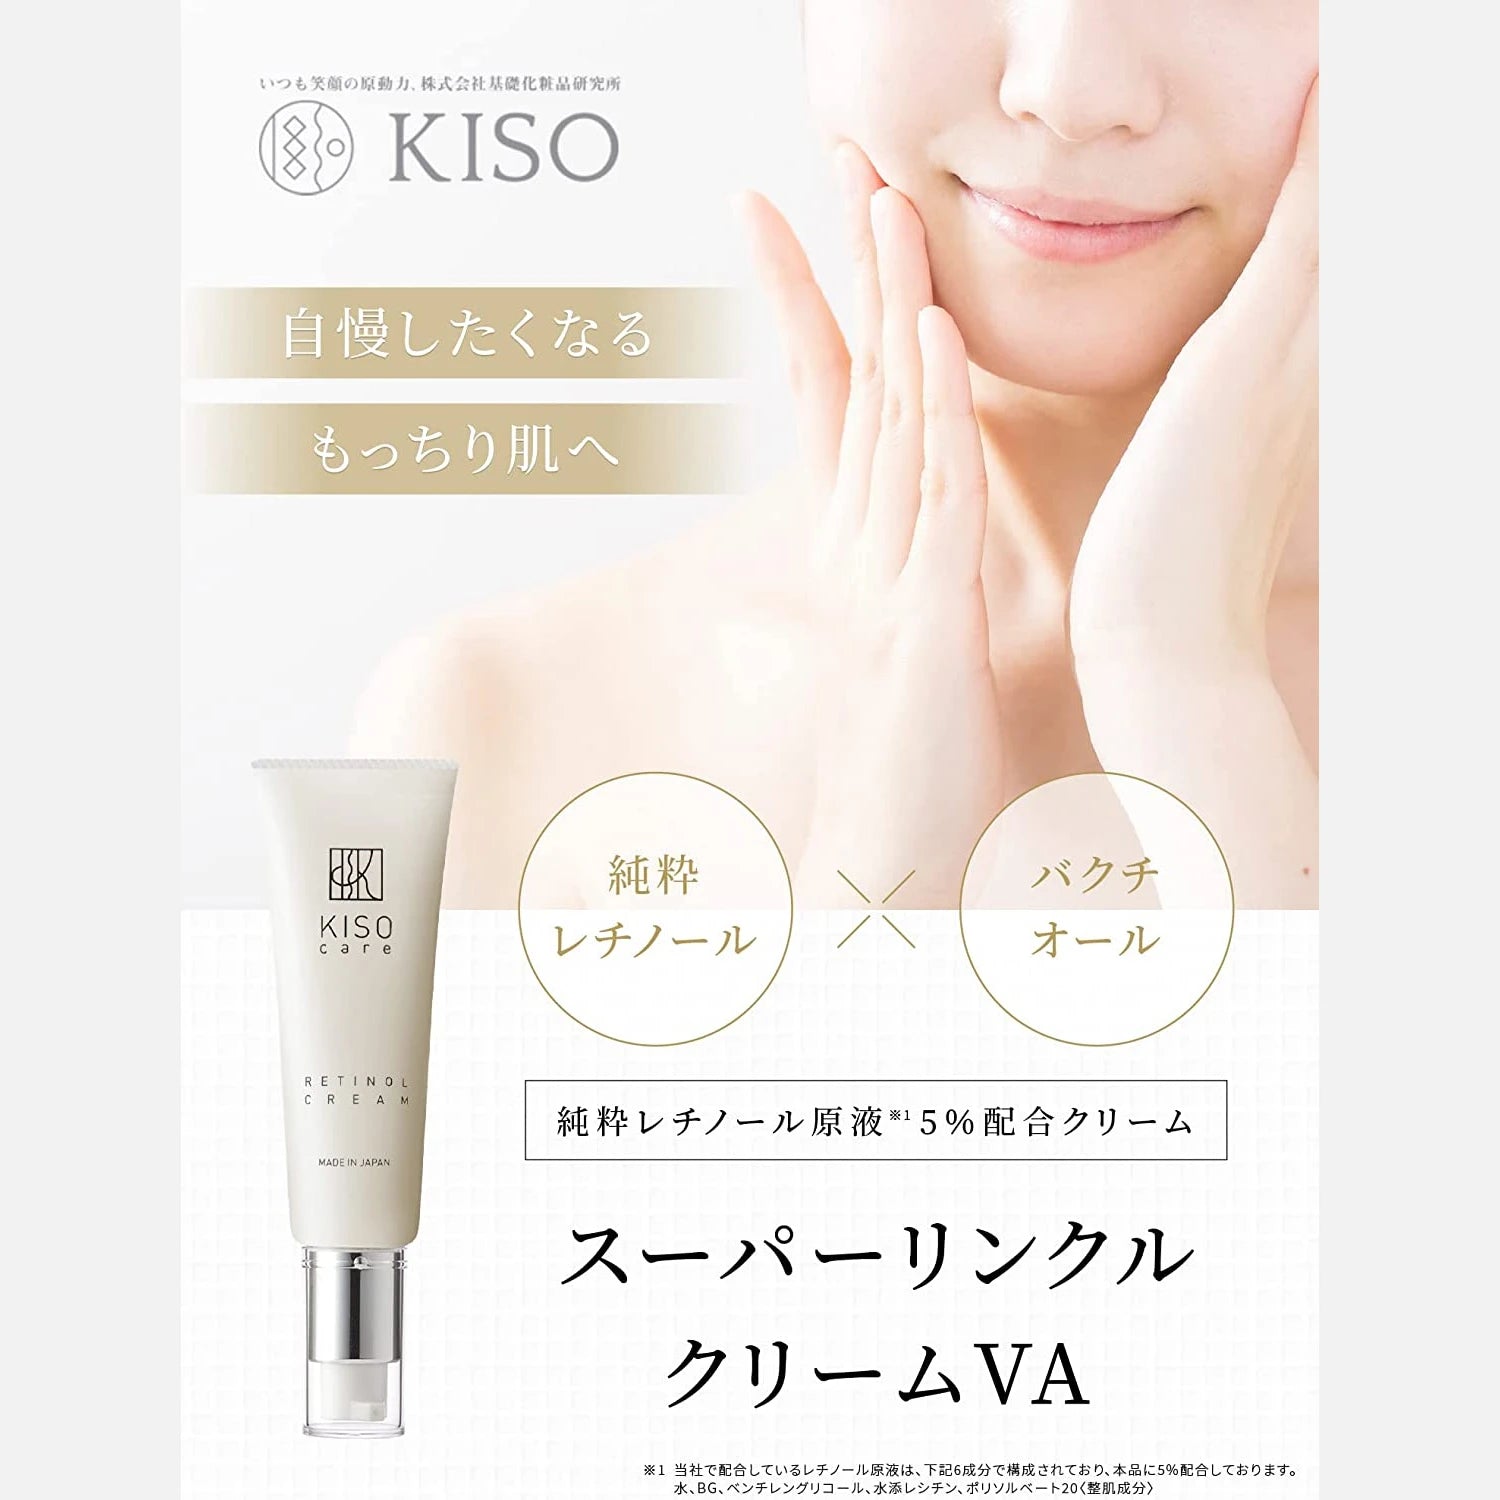 Kiso Care Pure Retinol 0.1% Cream 45g - Buy Me Japan